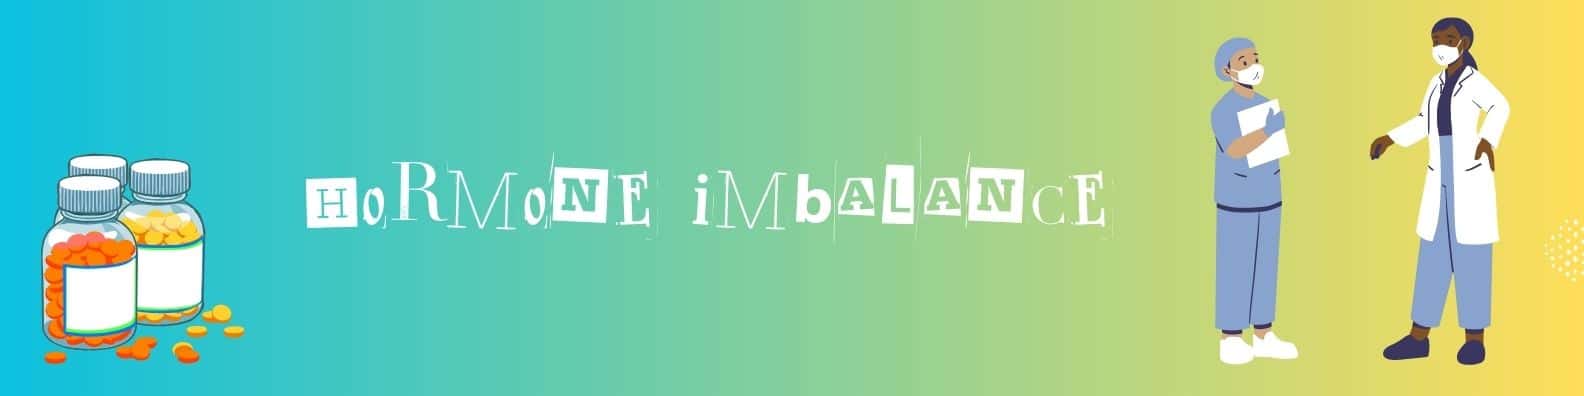 Hormone Imbalance blog popst